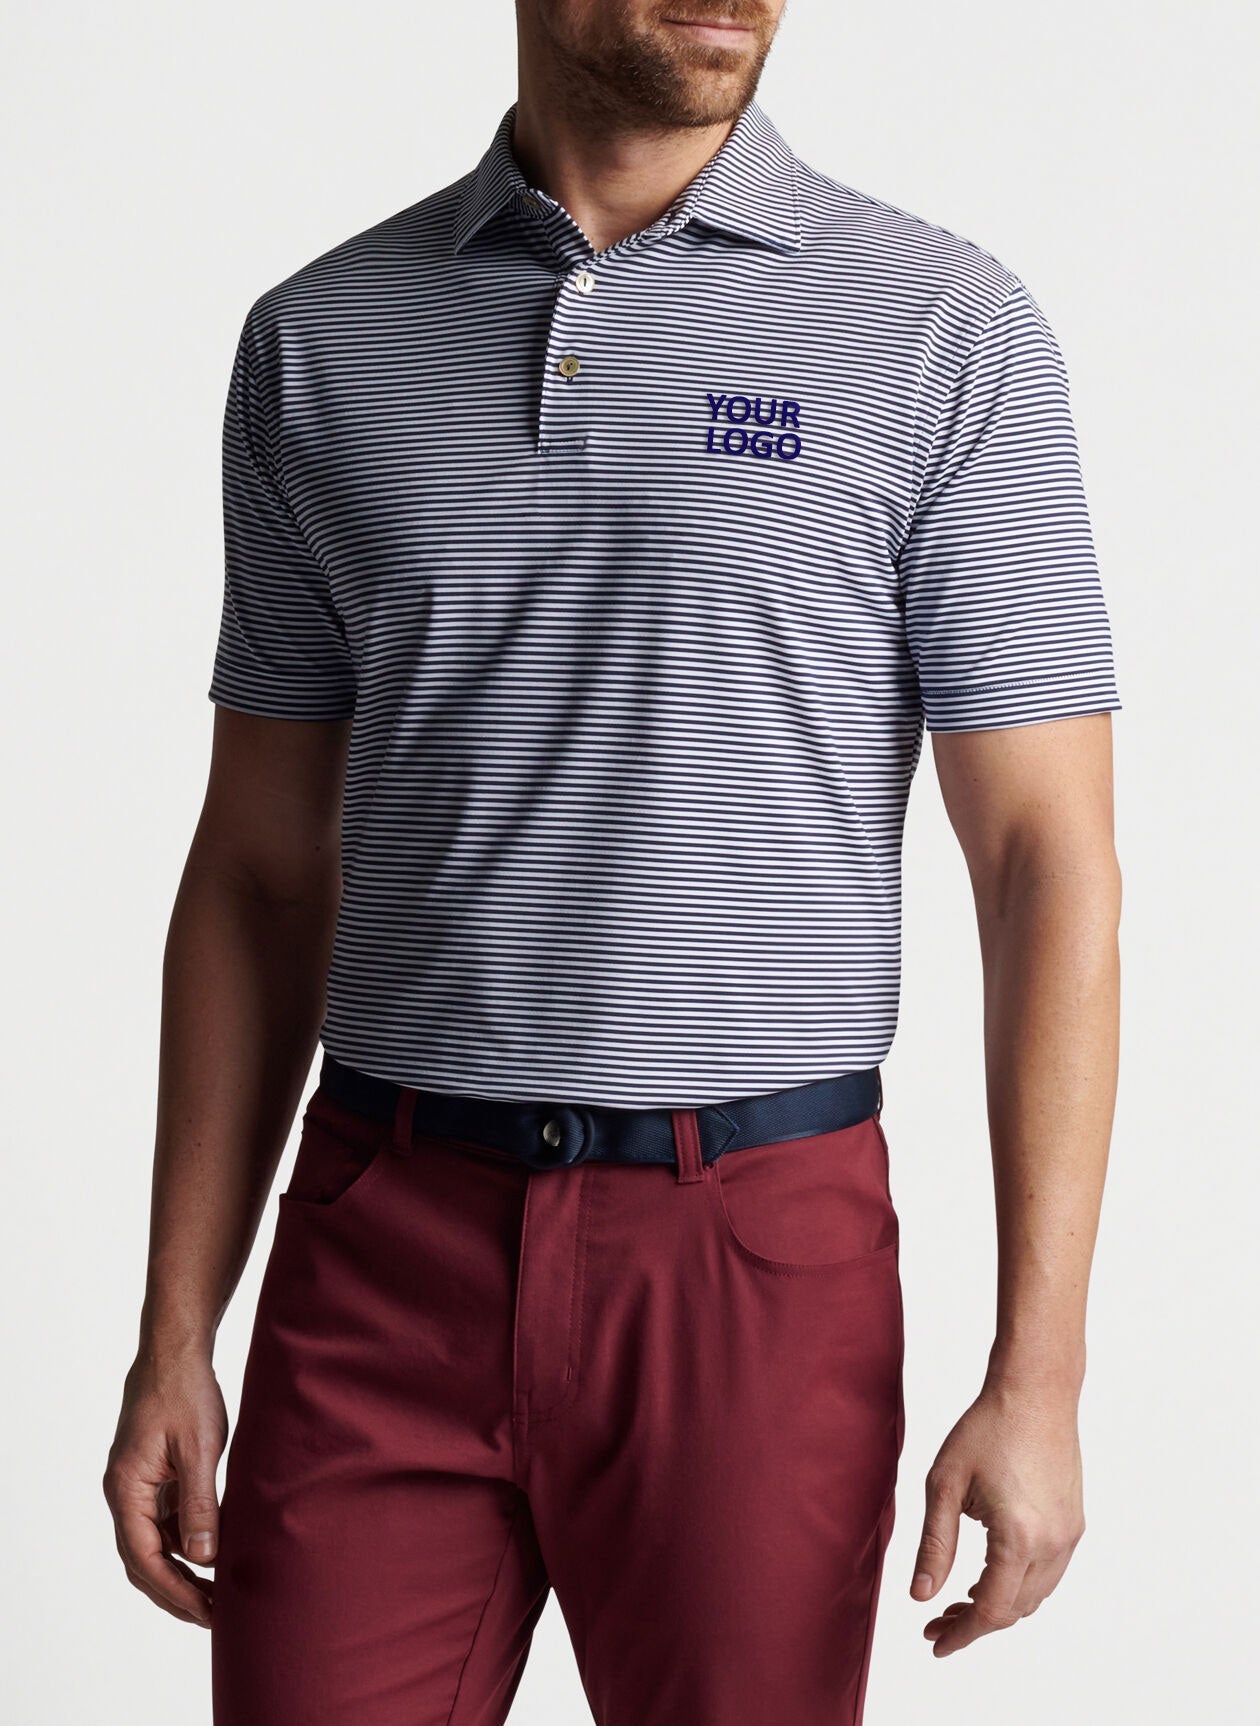 Peter Millar NAVY ME0EK03S custom dri fit polo shirts